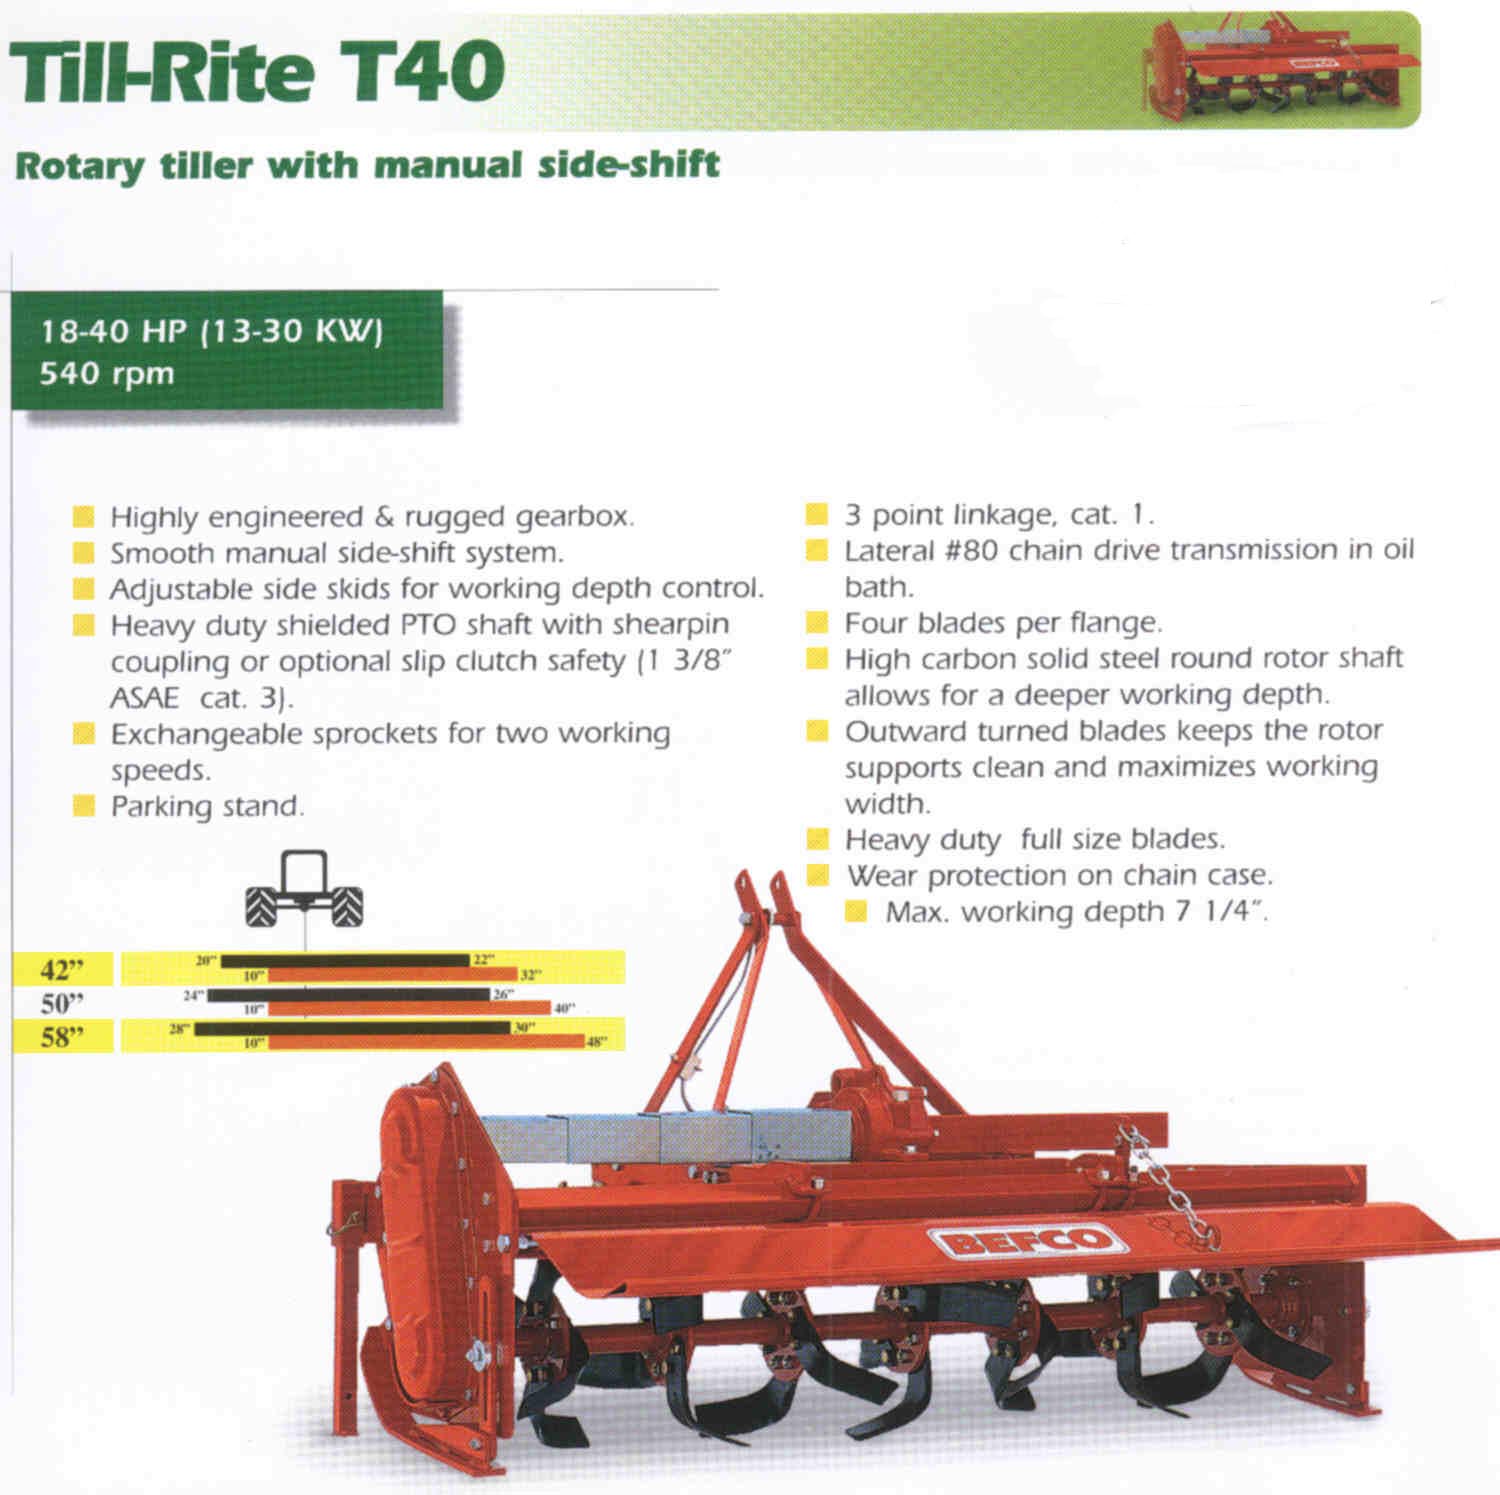 Till-Rite T40 Series Rotary Tillers